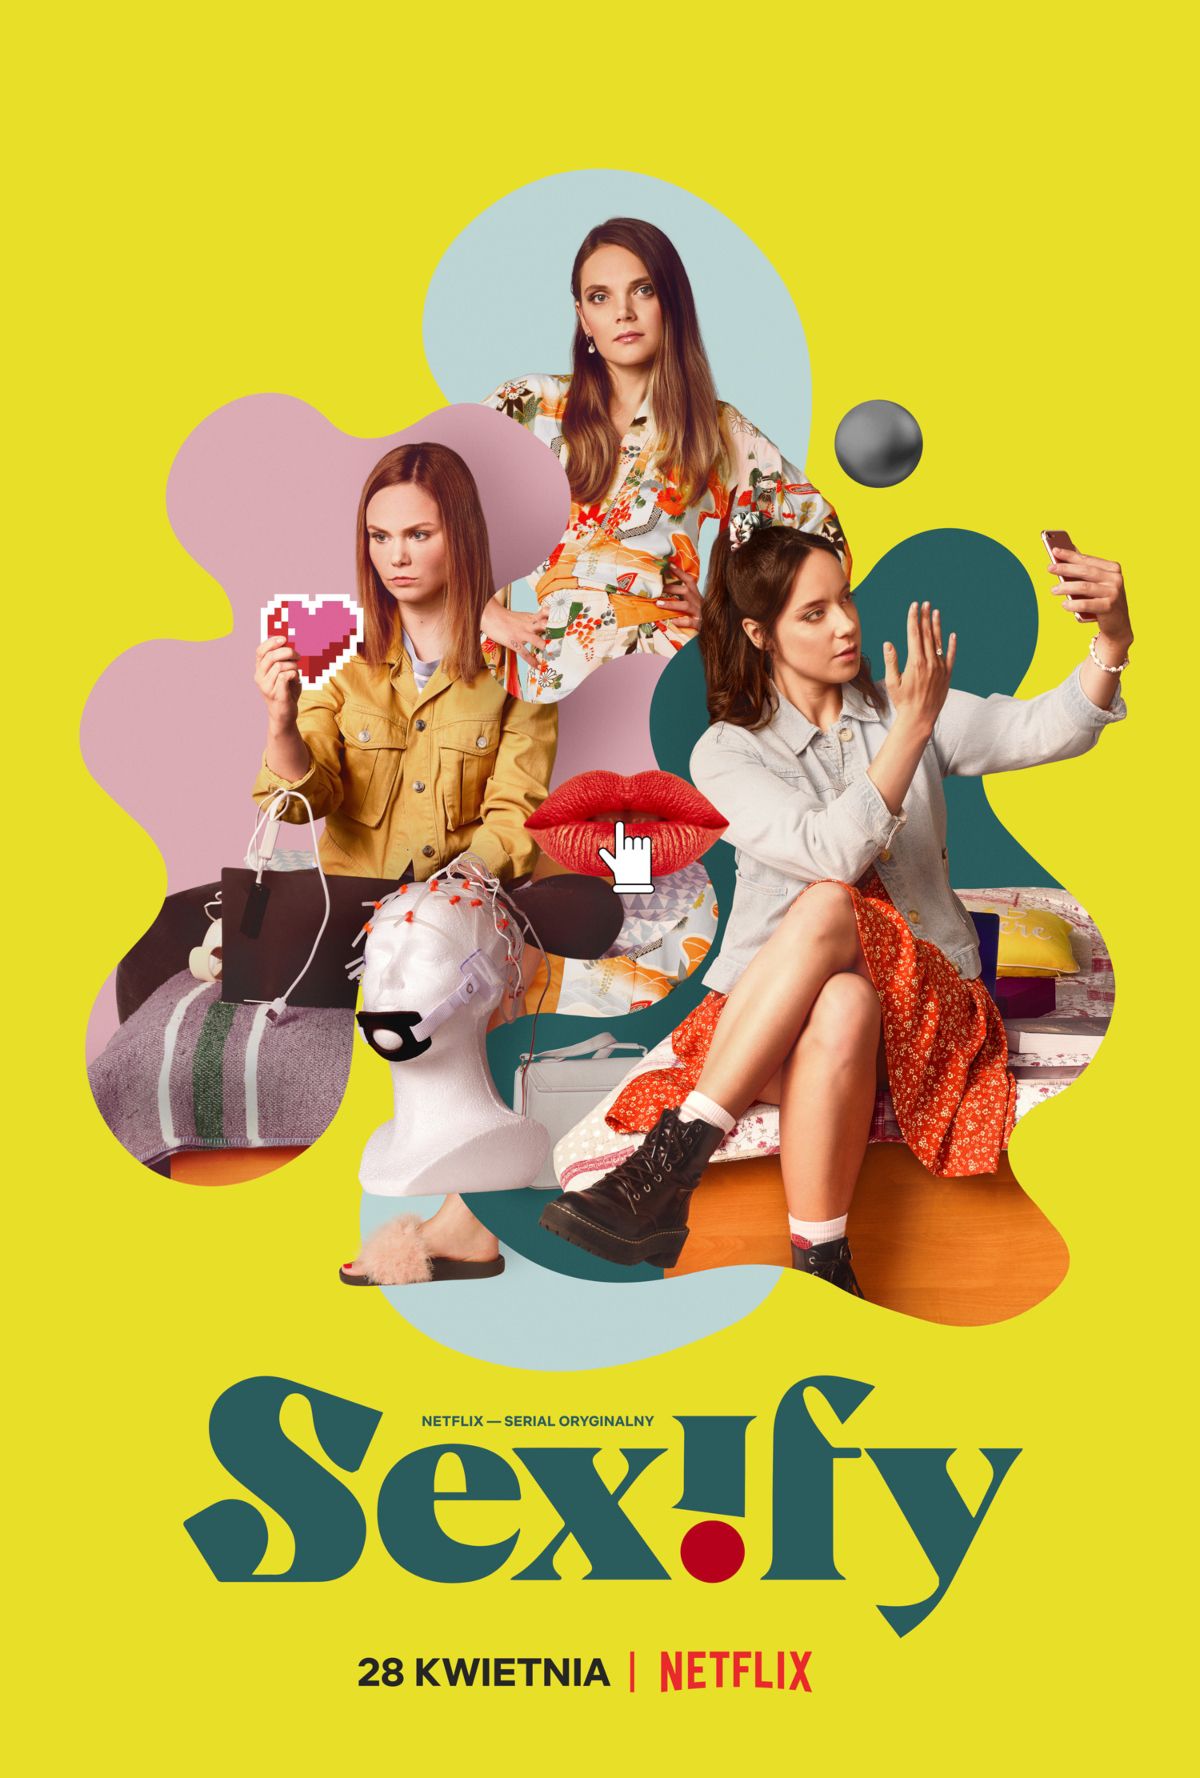 Voir Film Sexify - Série (2021) streaming VF gratuit complet